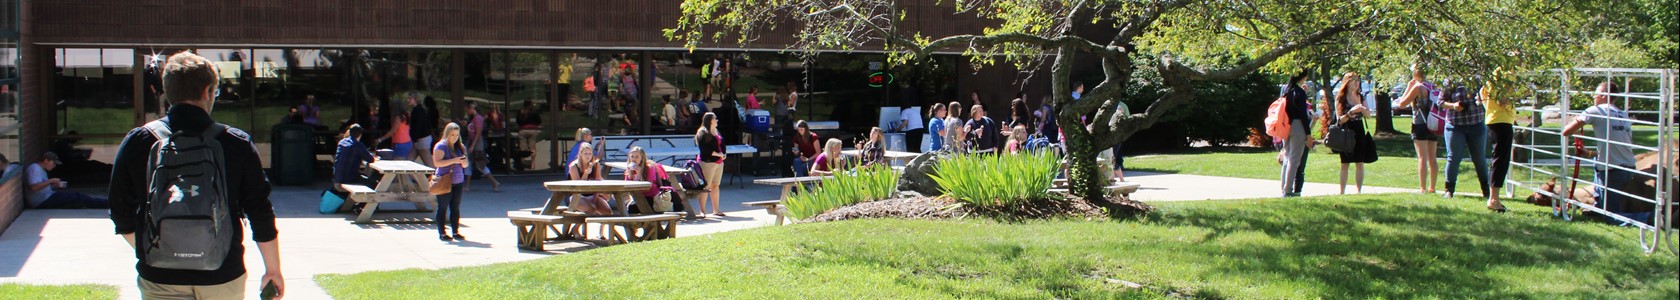 Students enjoy ɫ's Sidney campus picnic area